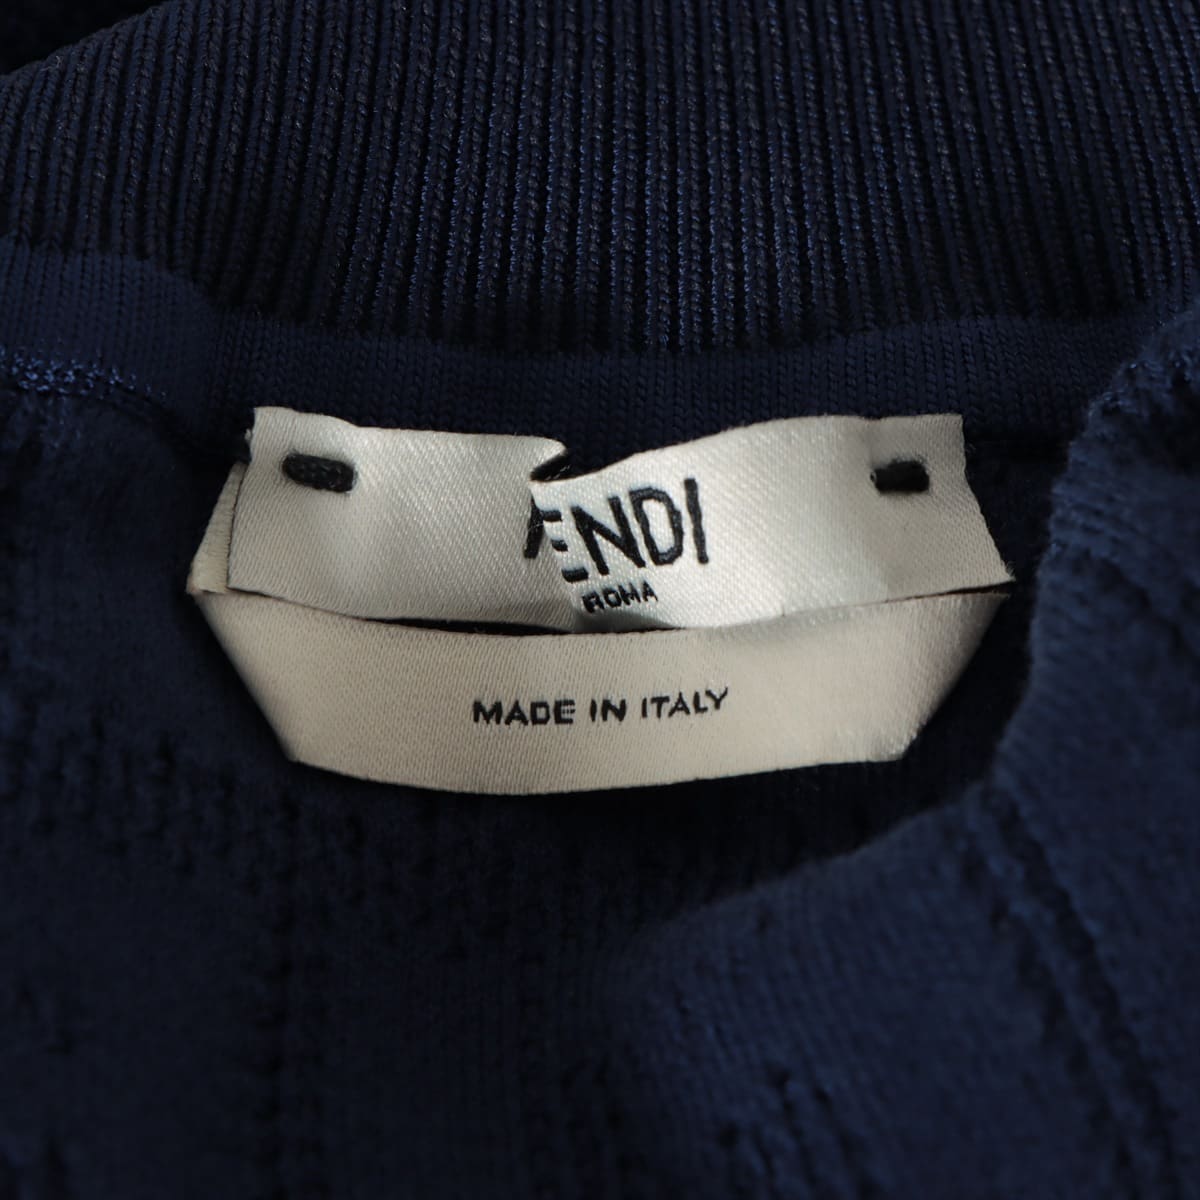 Fendi ZUCCa 20 years Cotton & rayon Knit Skirt 38 Ladies' Navy blue  FZQ598